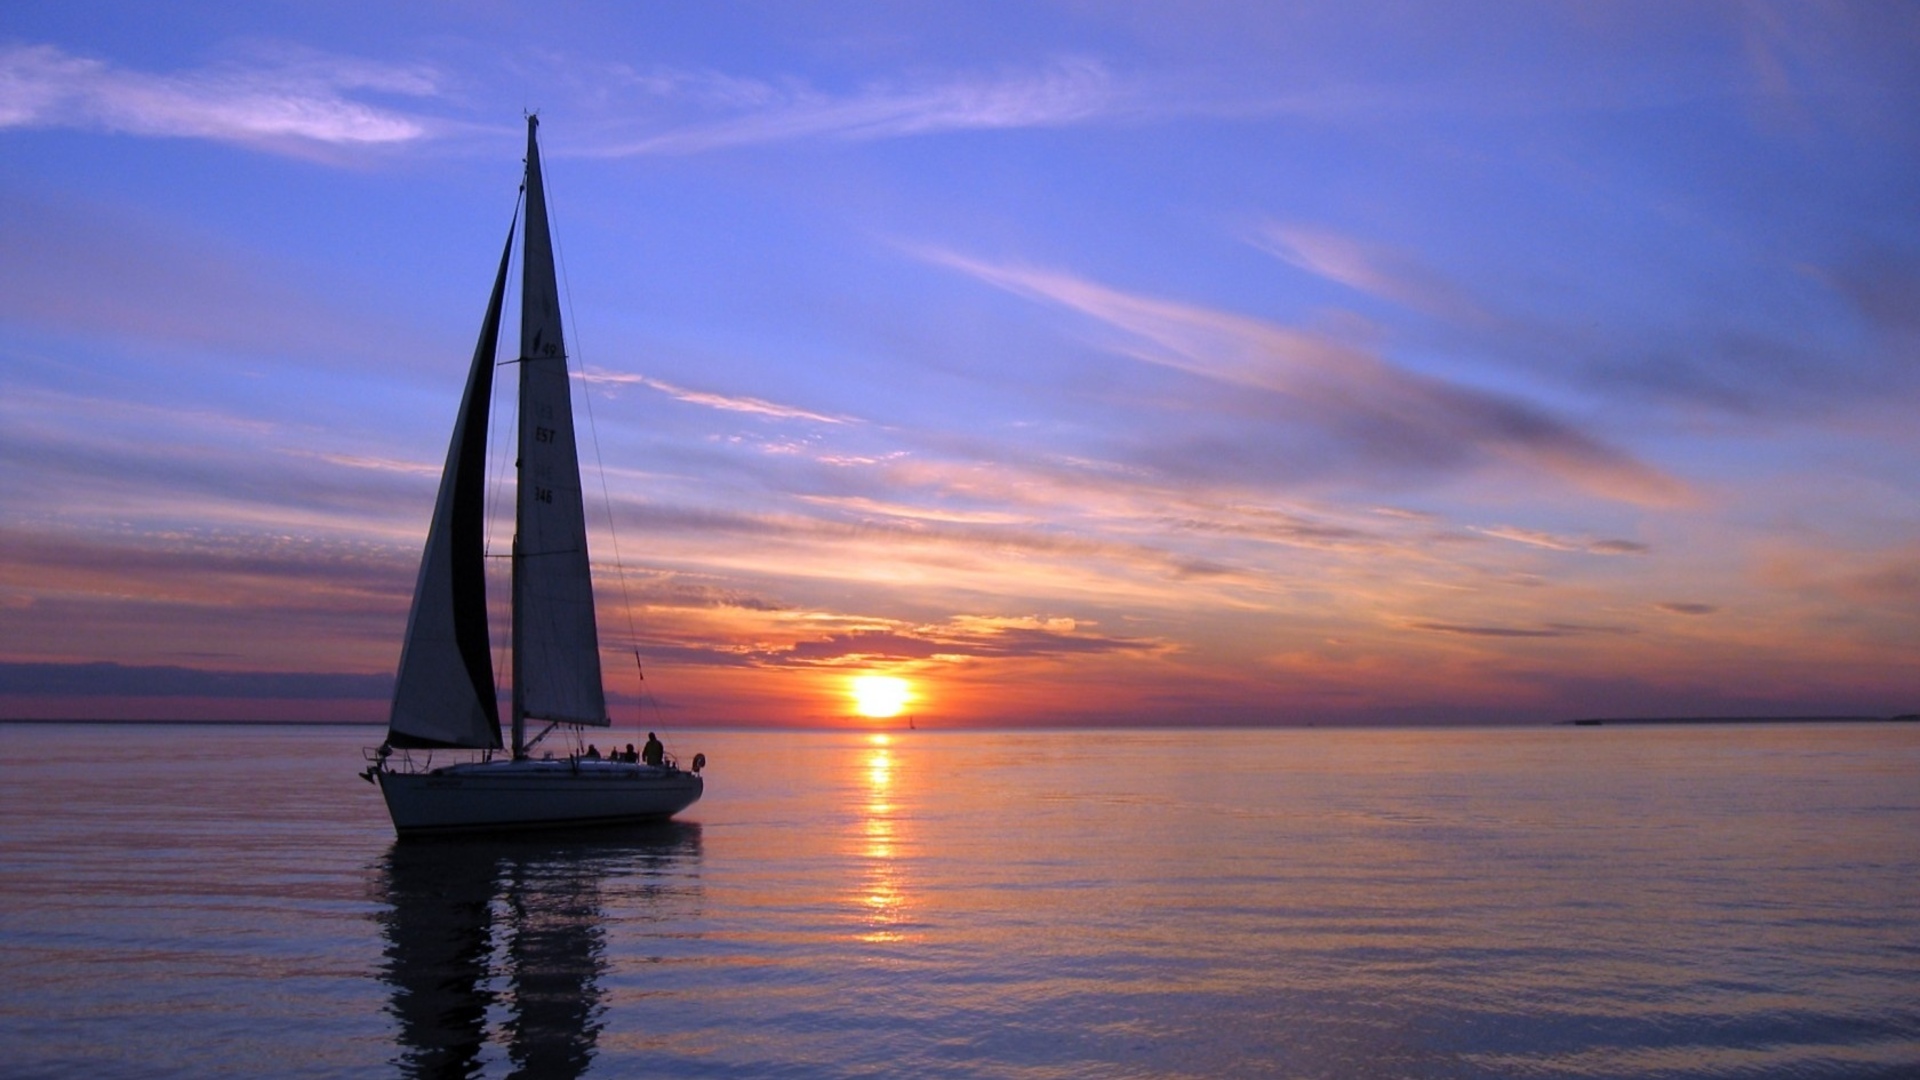 Boats silboat boats ship sailing ocean sea sky clouds sunset